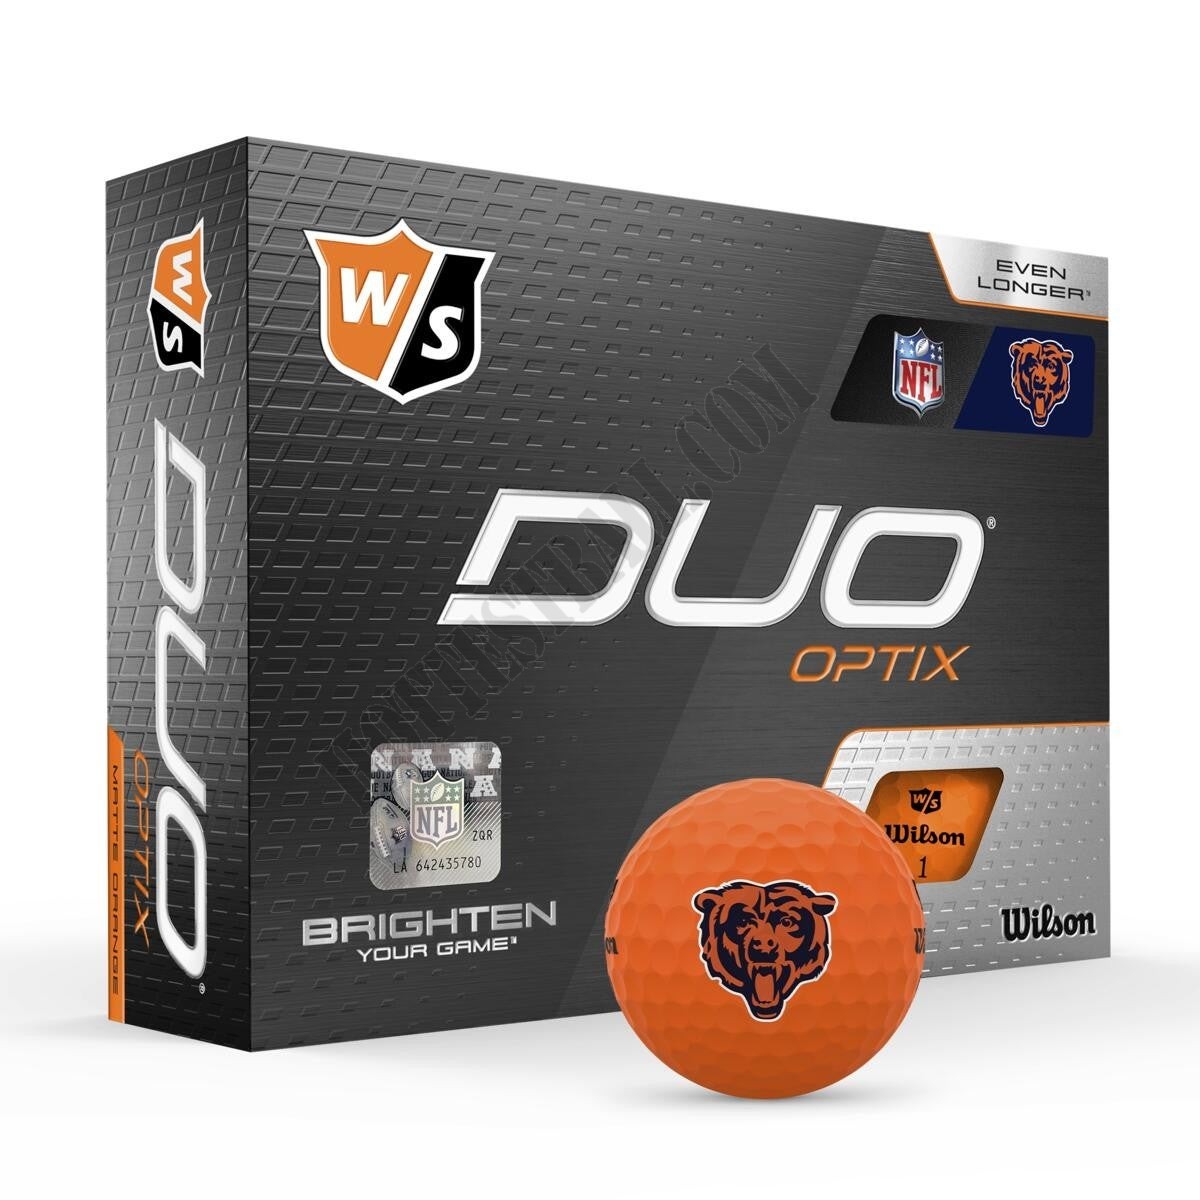 Duo Optix NFL Golf Balls - Chicago Bears ● Wilson Promotions - Duo Optix NFL Golf Balls - Chicago Bears ● Wilson Promotions